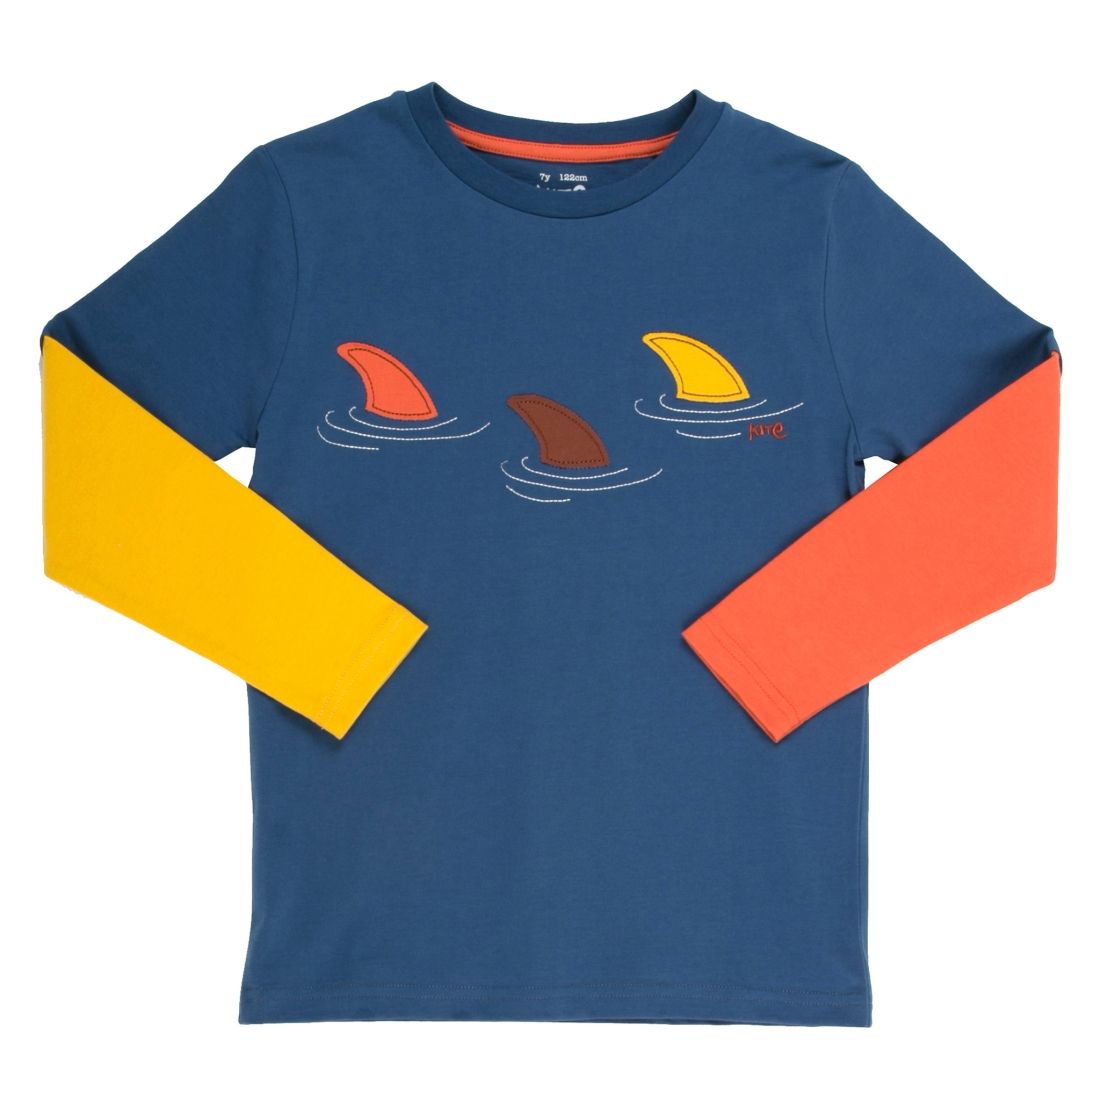 Kite Long Sleeved Tee Shirt Boys Dolphin Cros